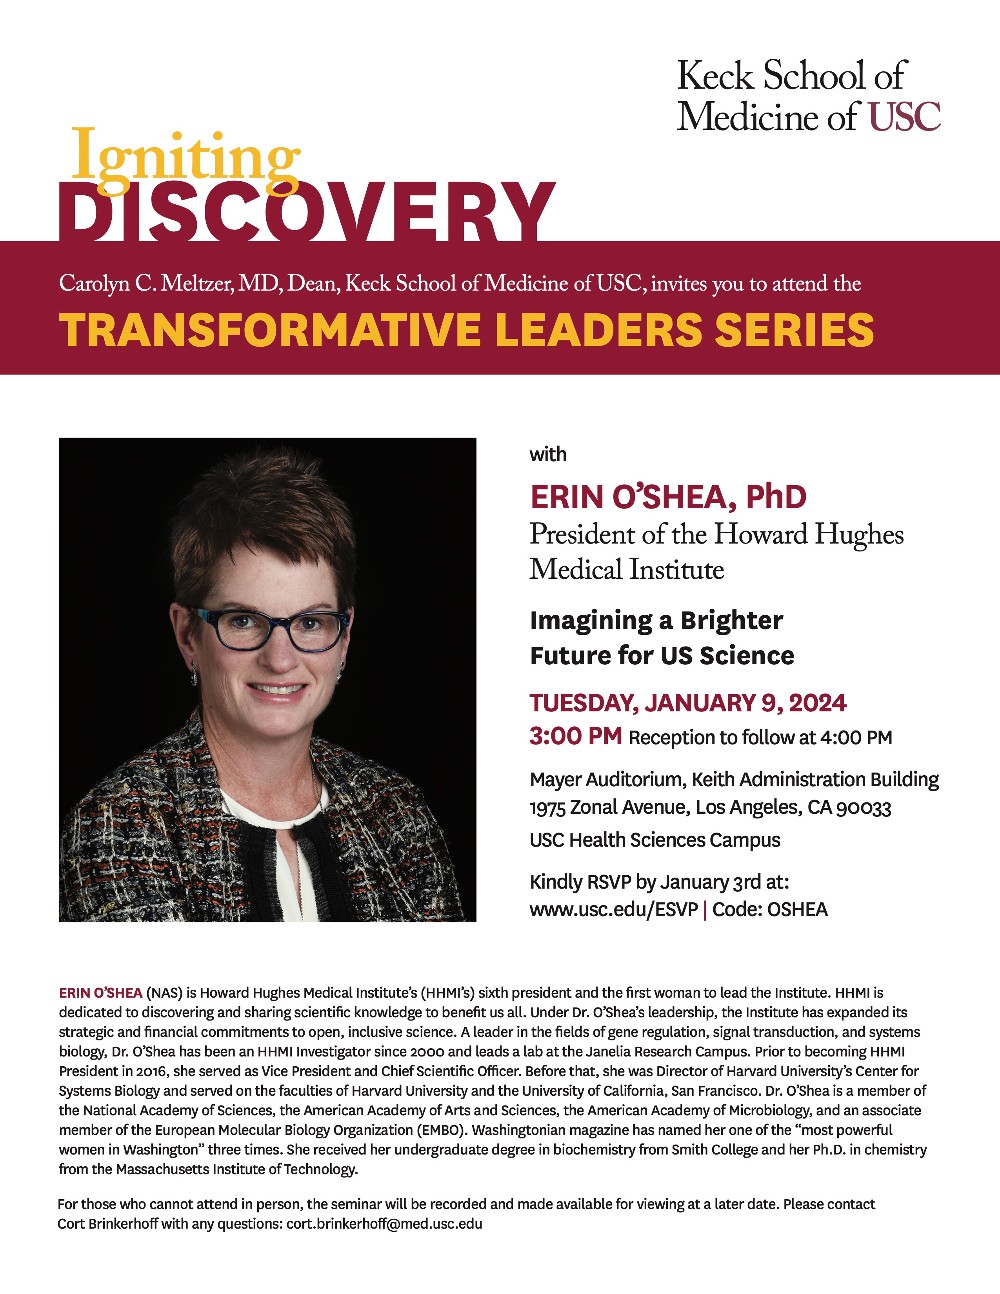 Dean's Transformative Leaders Series With Erin O'Shea, PhD - Events Calendar